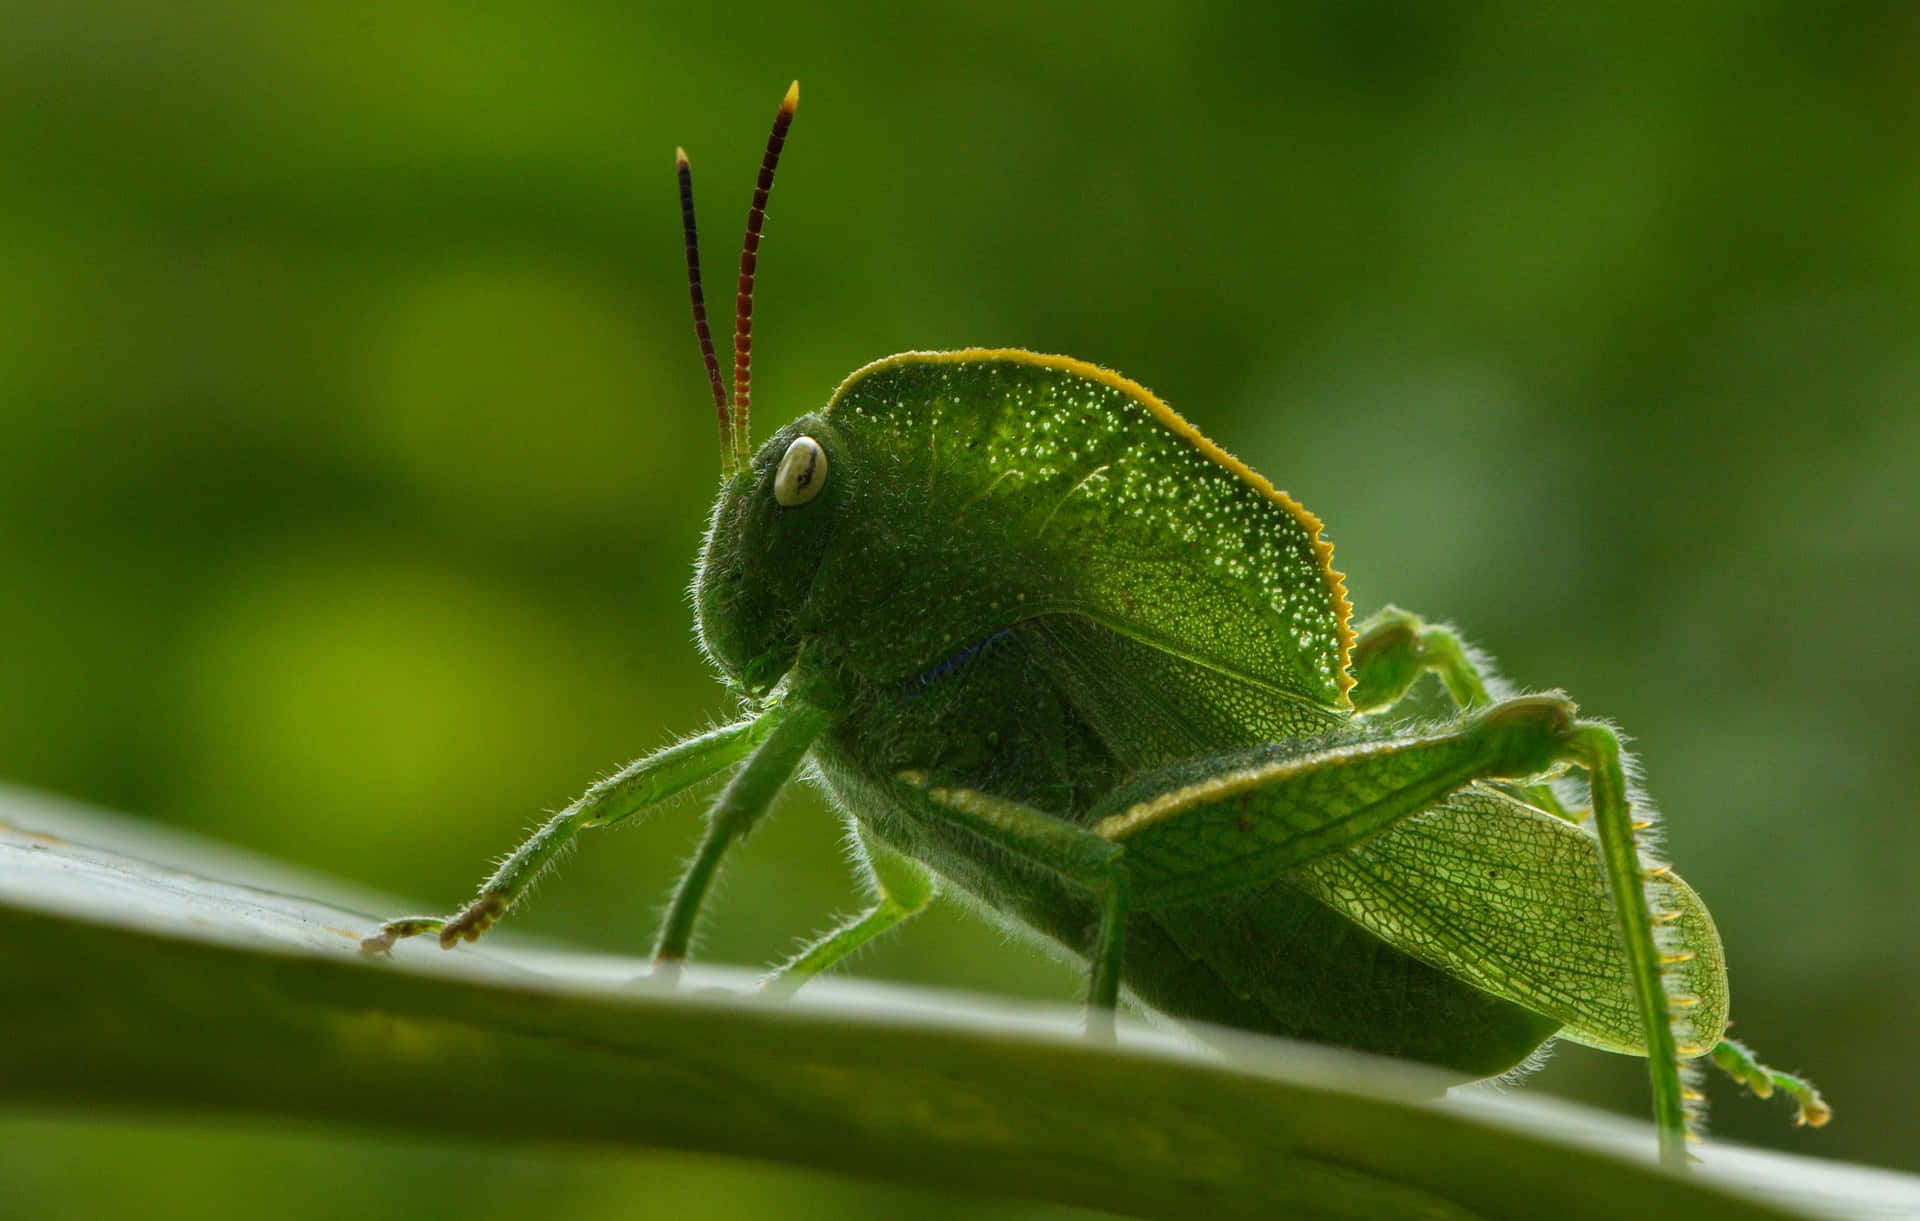 Vibrant Close-Up of a Green Grasshopper